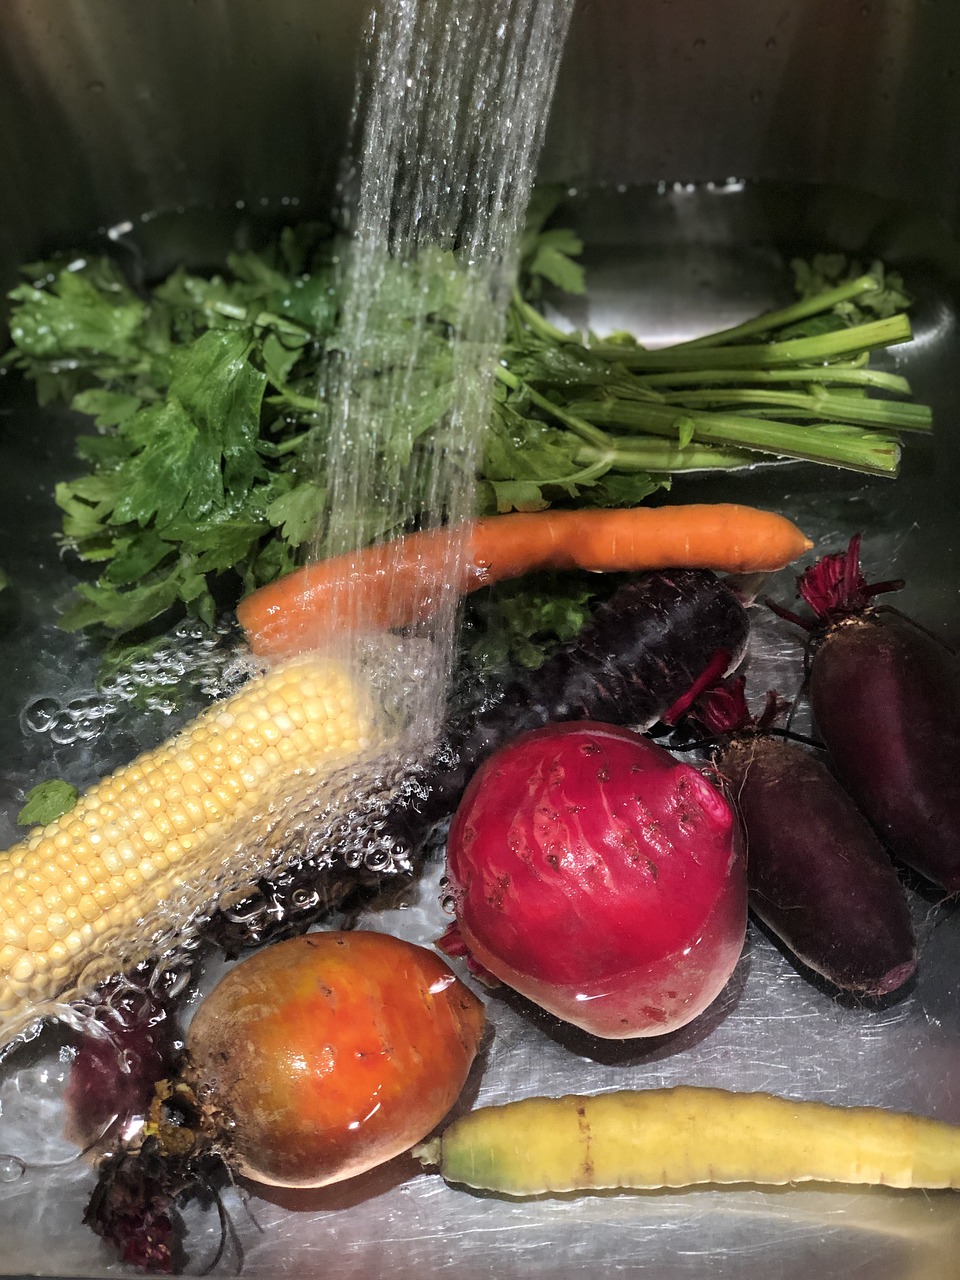 washing-vegetables-5012316-1280.jpg